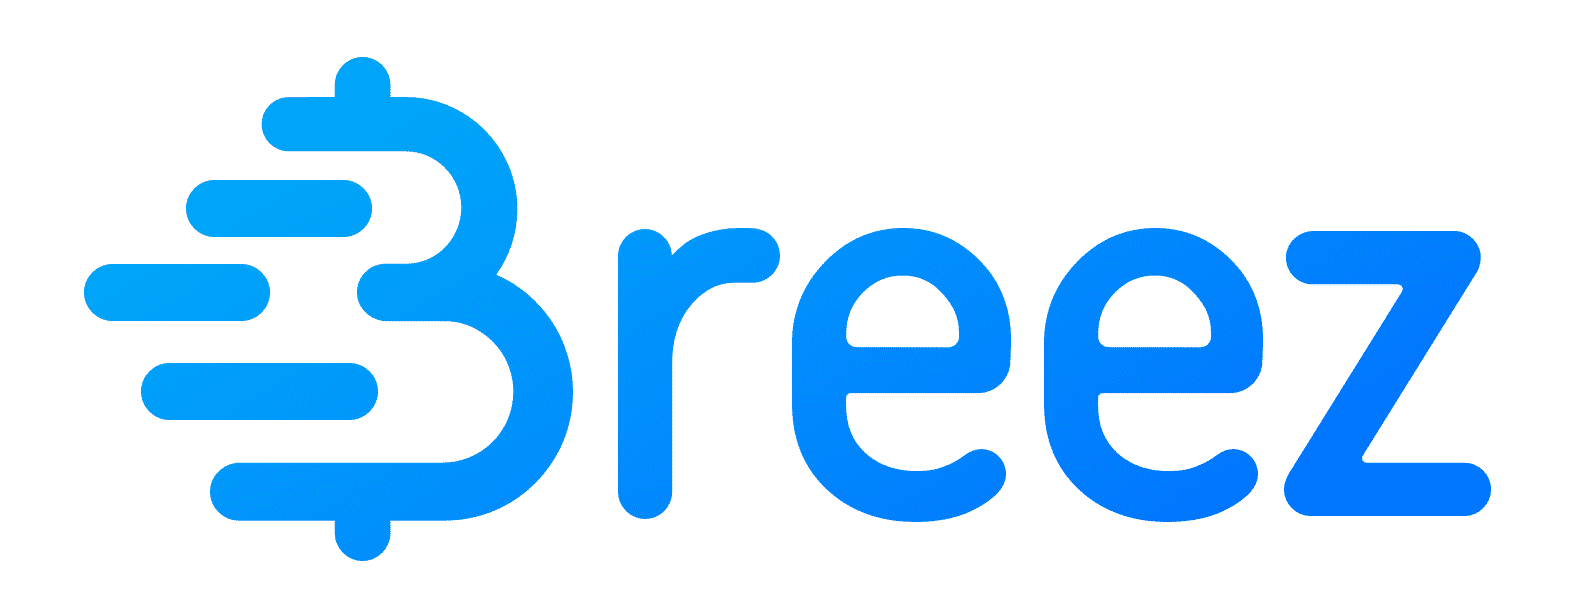 Breez - Crunchbase Company Profile & Funding